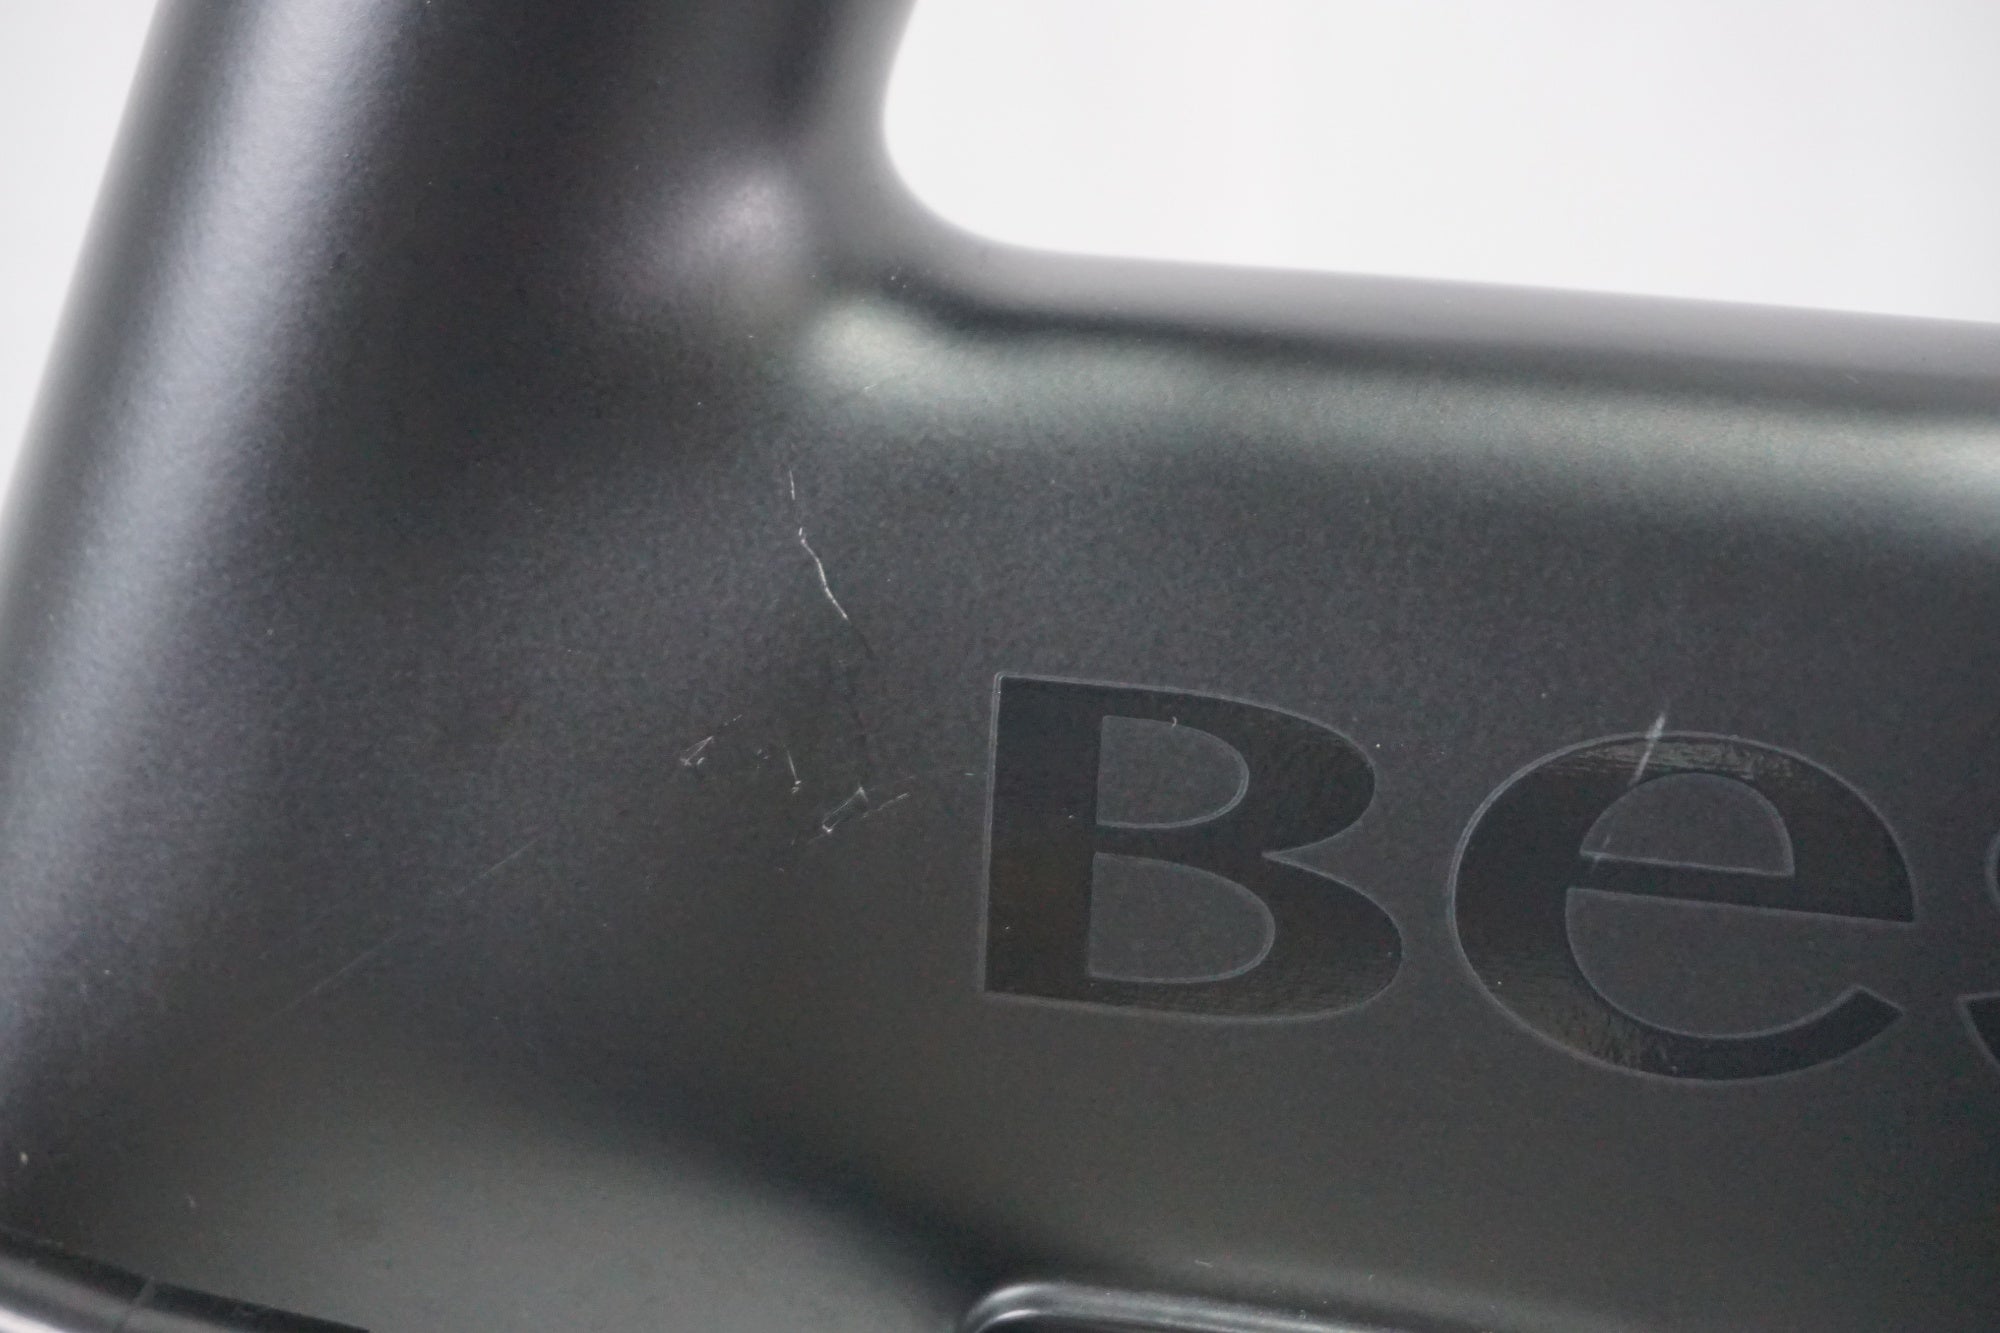 BESV 「ベスビー」 PSA1 2024年モデル 20インチ 電動アシスト自転車 / AKIBA店